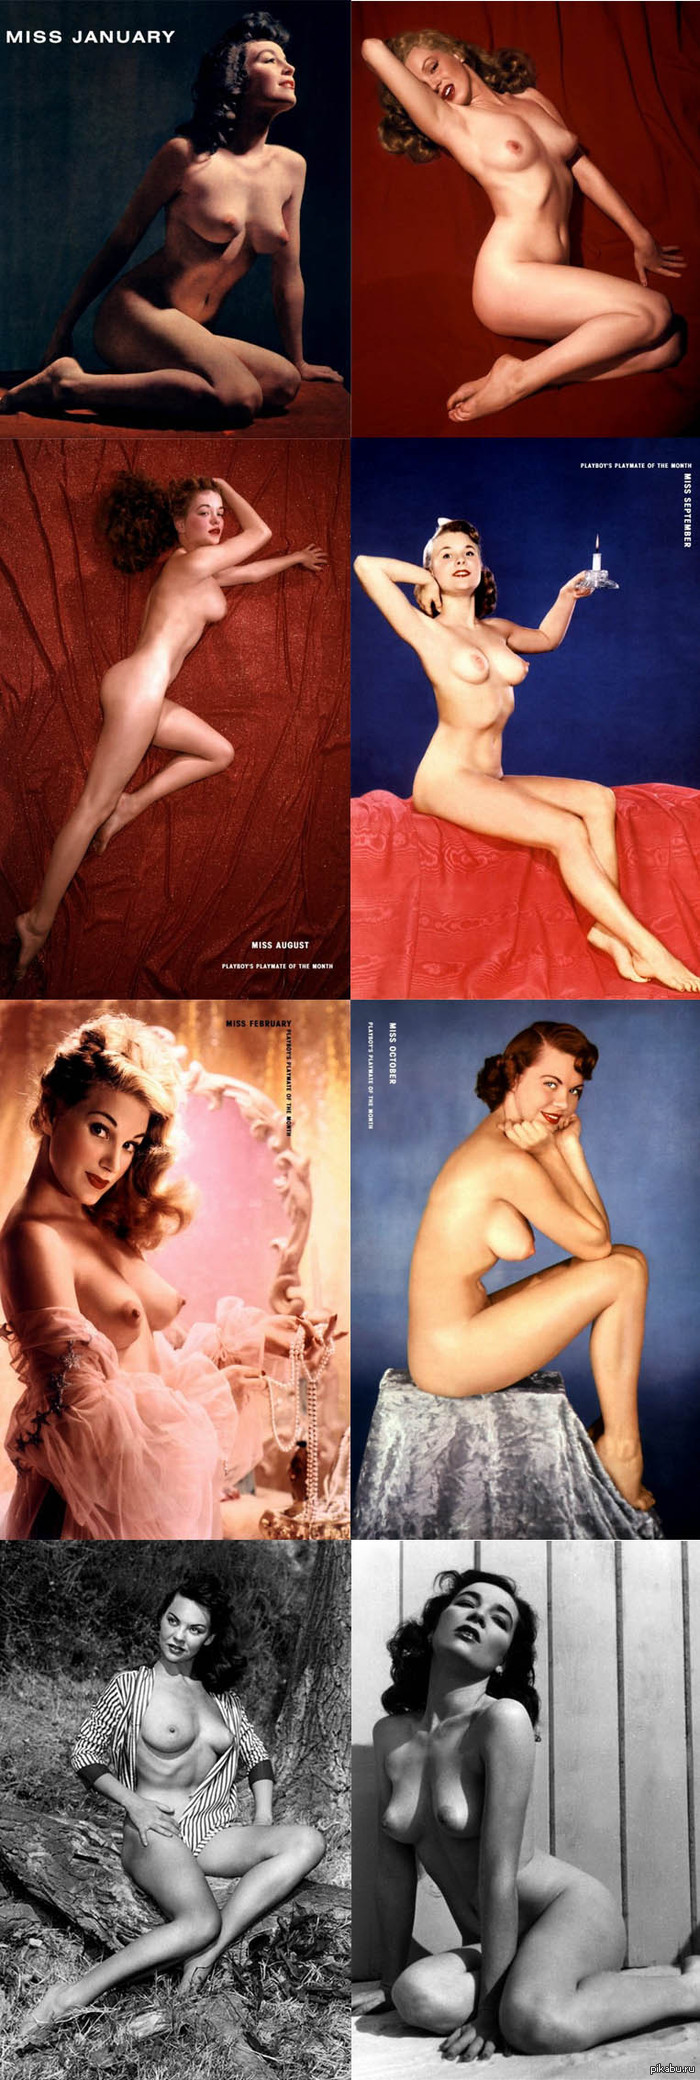 Playboy 1954-1955 - 1955, 1954, NSFW, Playboy, Retro, Not mine, Longpost